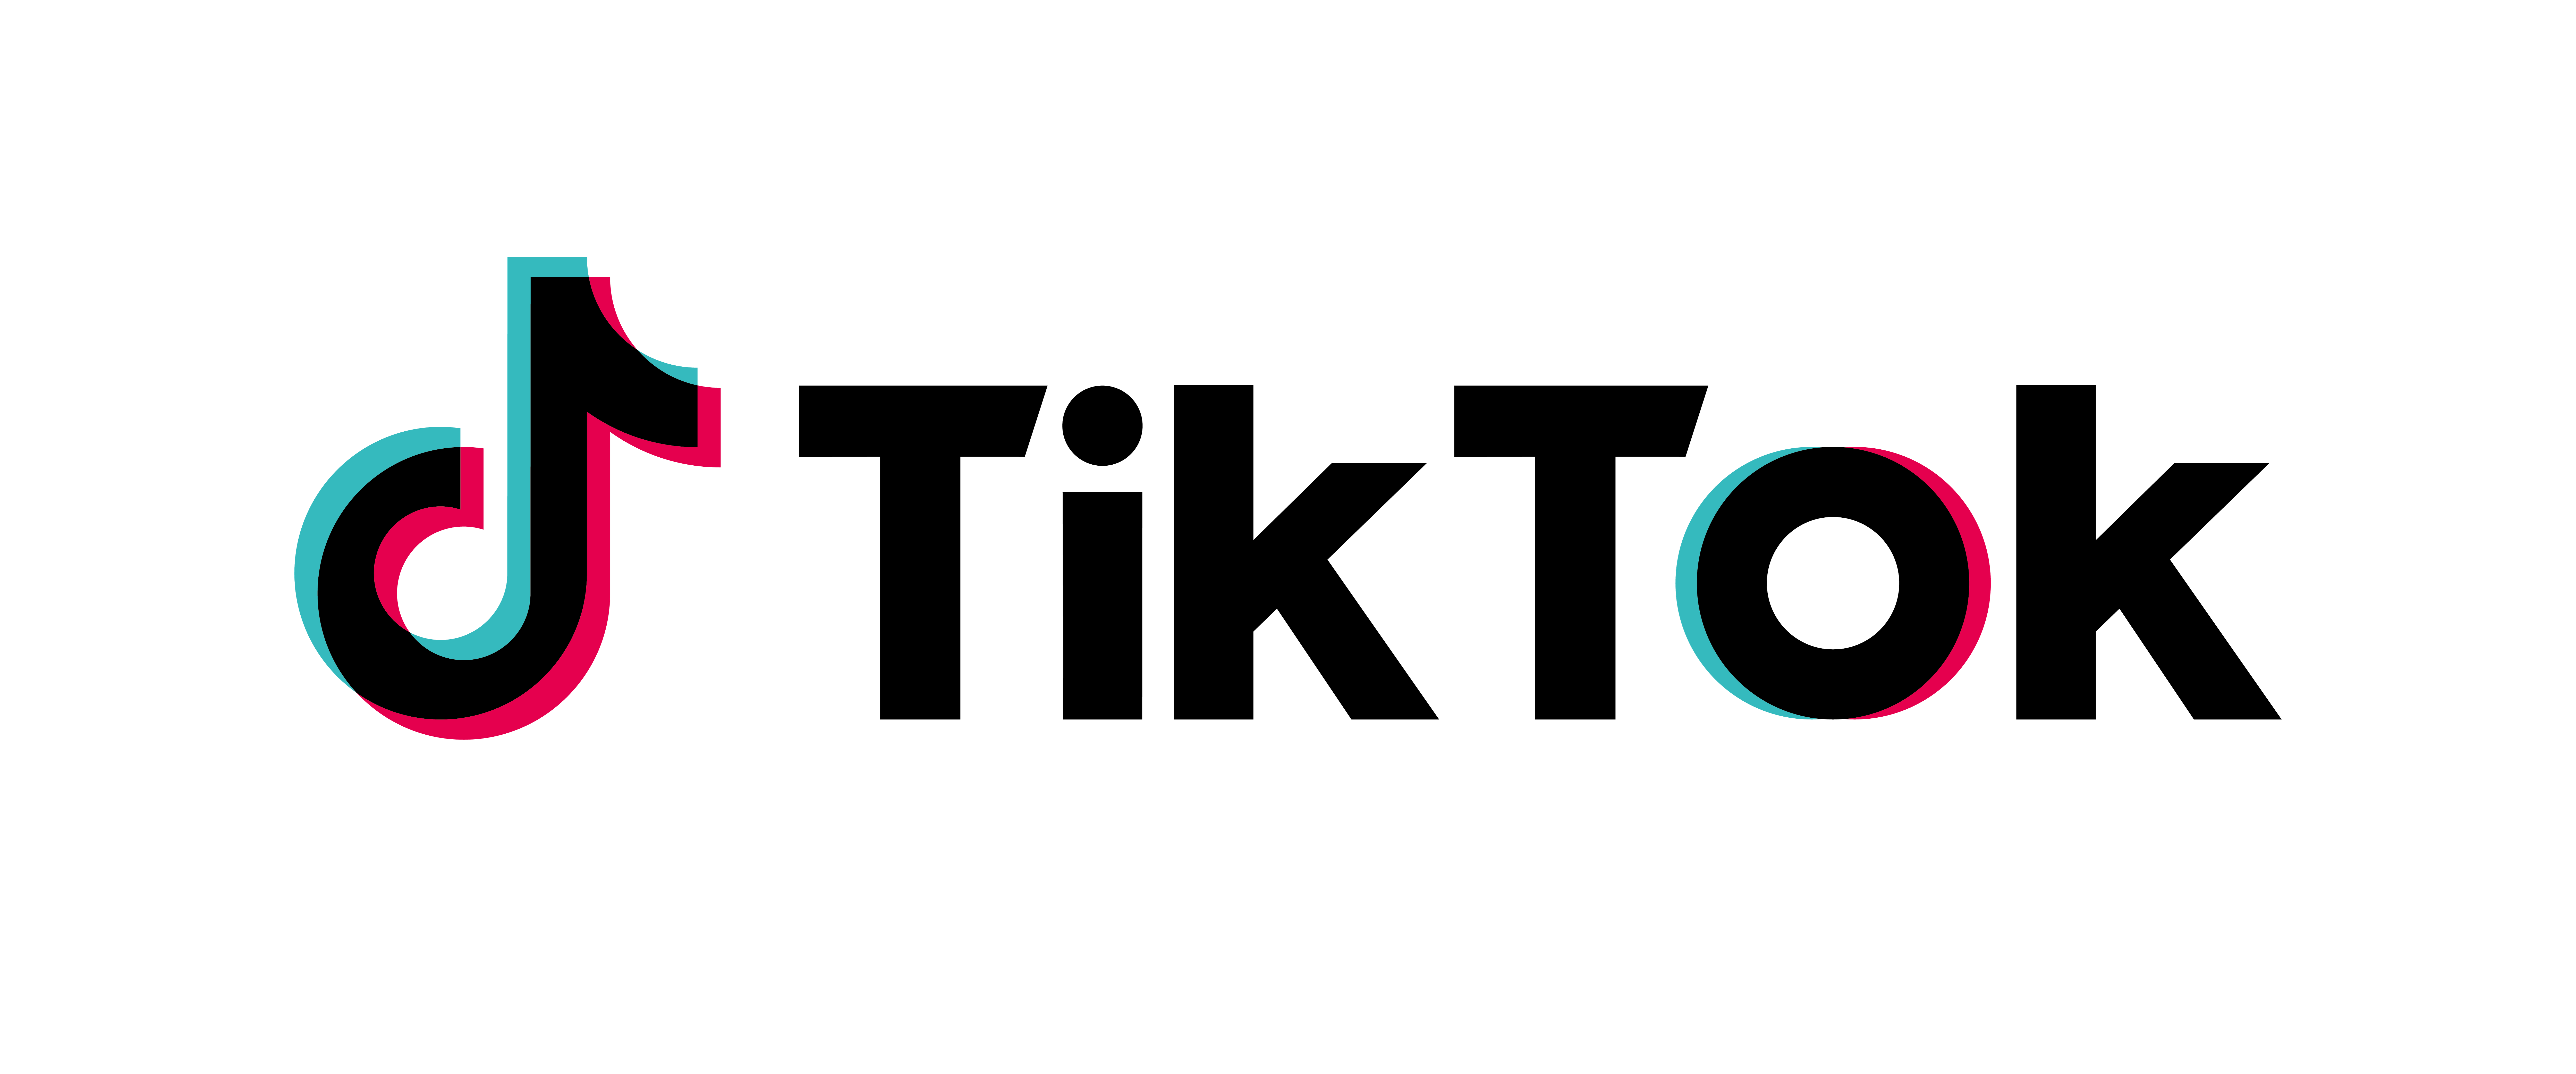 TikTok-logo-CMYK-Horizontal-black